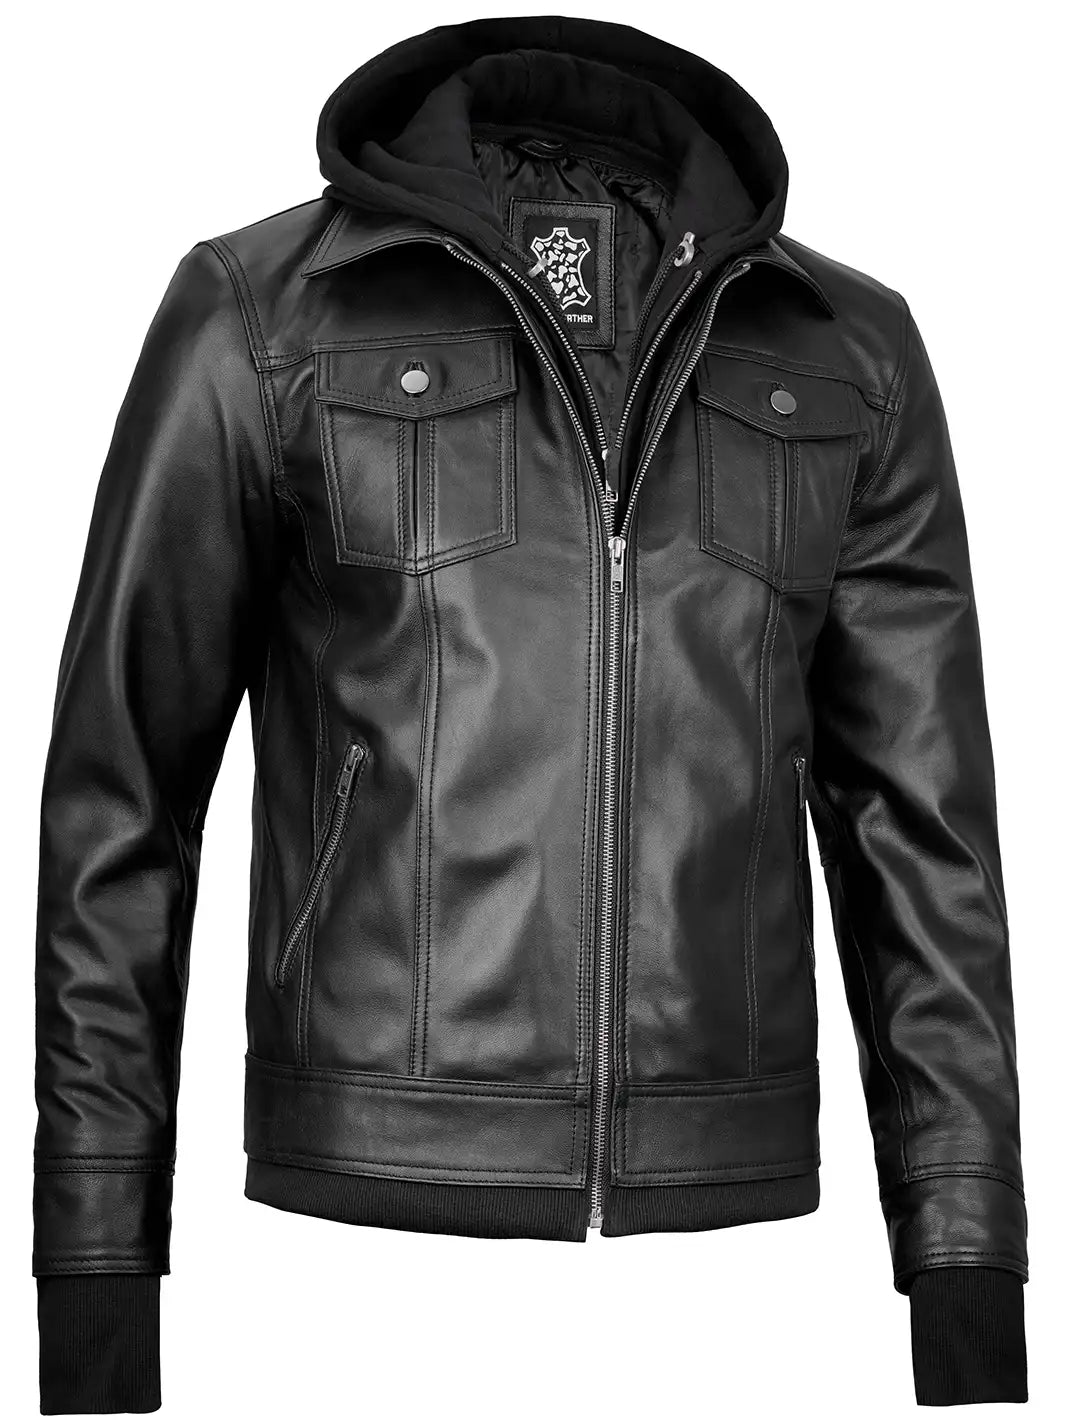 Mens black hooded leather jacket